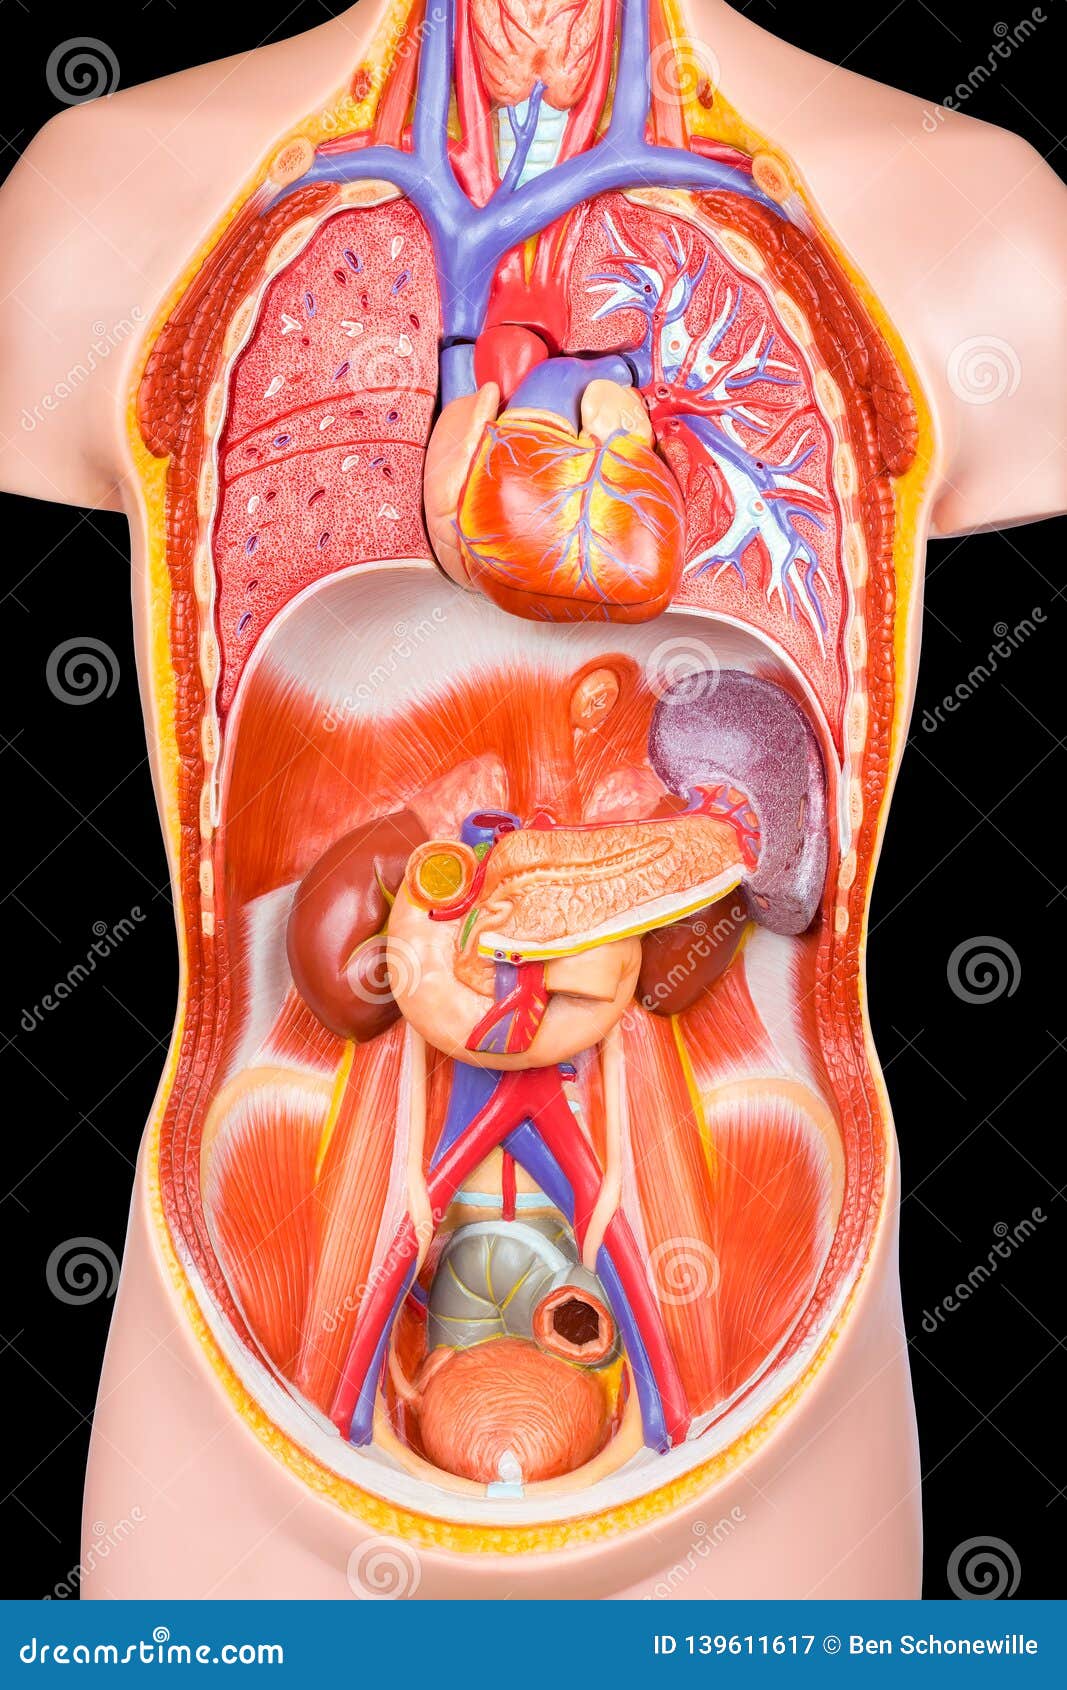 Human Internal Organs Lined With Vegetables Stock Photo | CartoonDealer